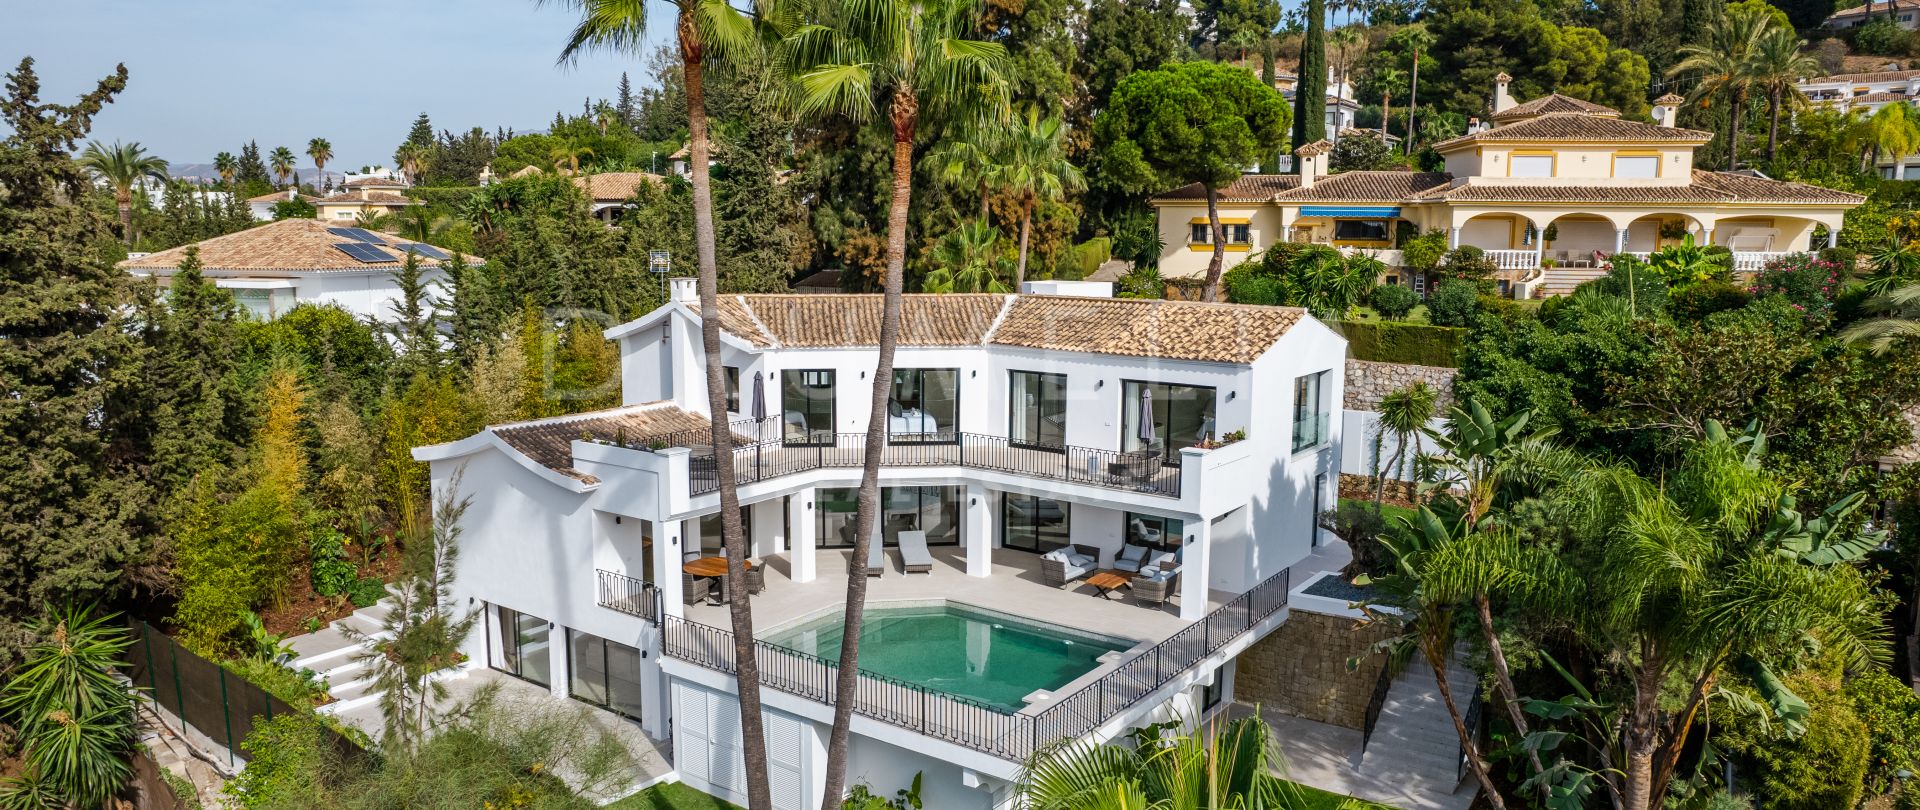 Villa Star - Beautiful Mediterranean villa with modern interior in El Paraiso, New Golden Mile of Estepona